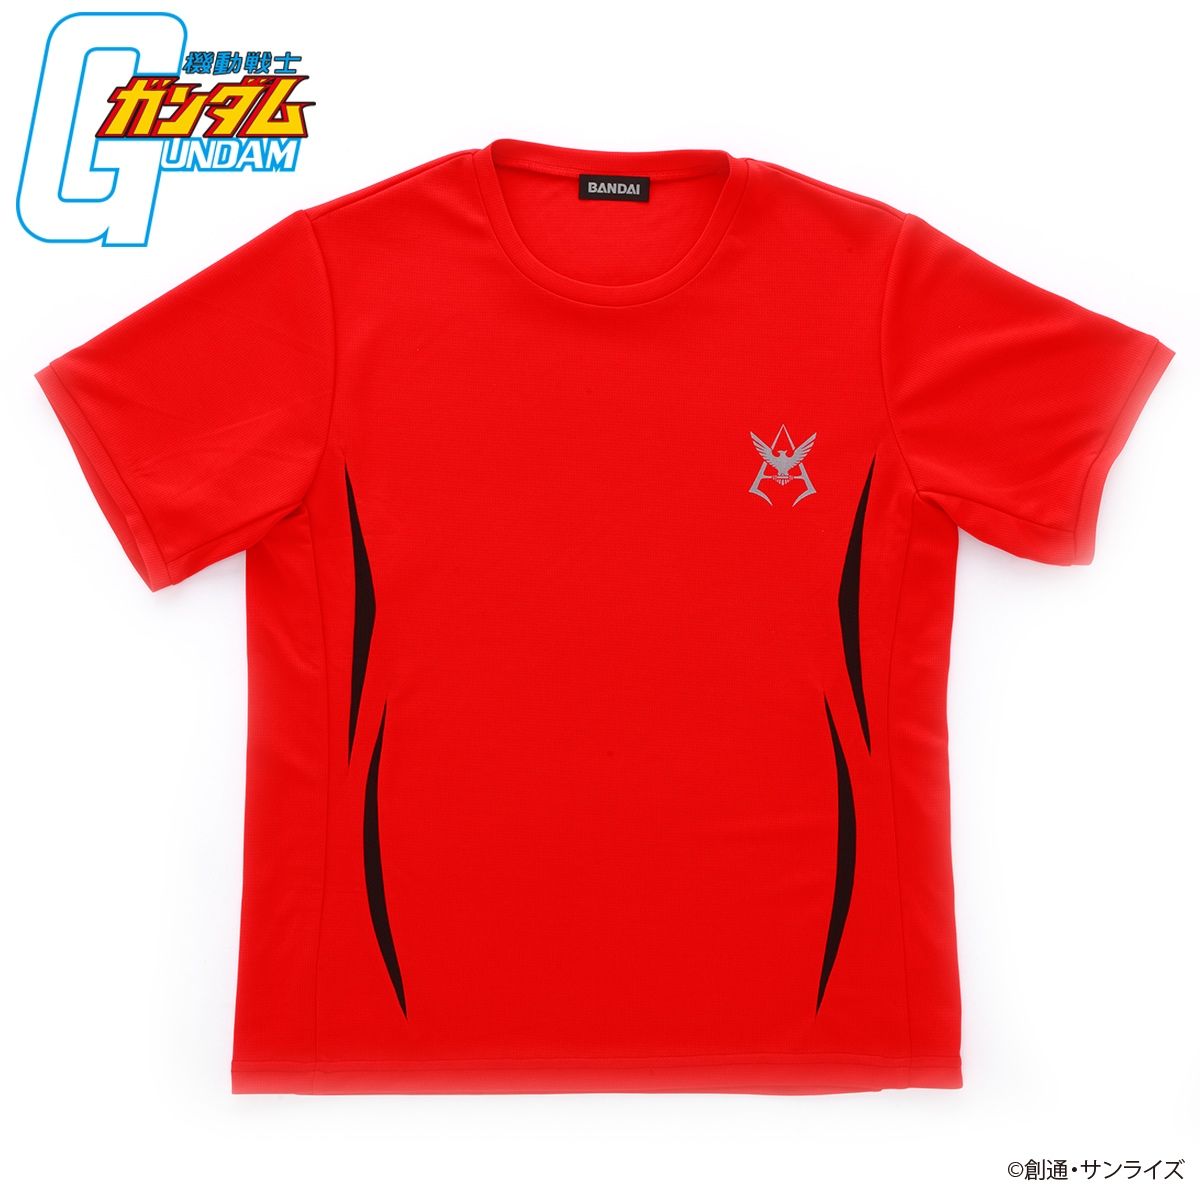 Mobile Suit Gundam Sportswear - T-shirt